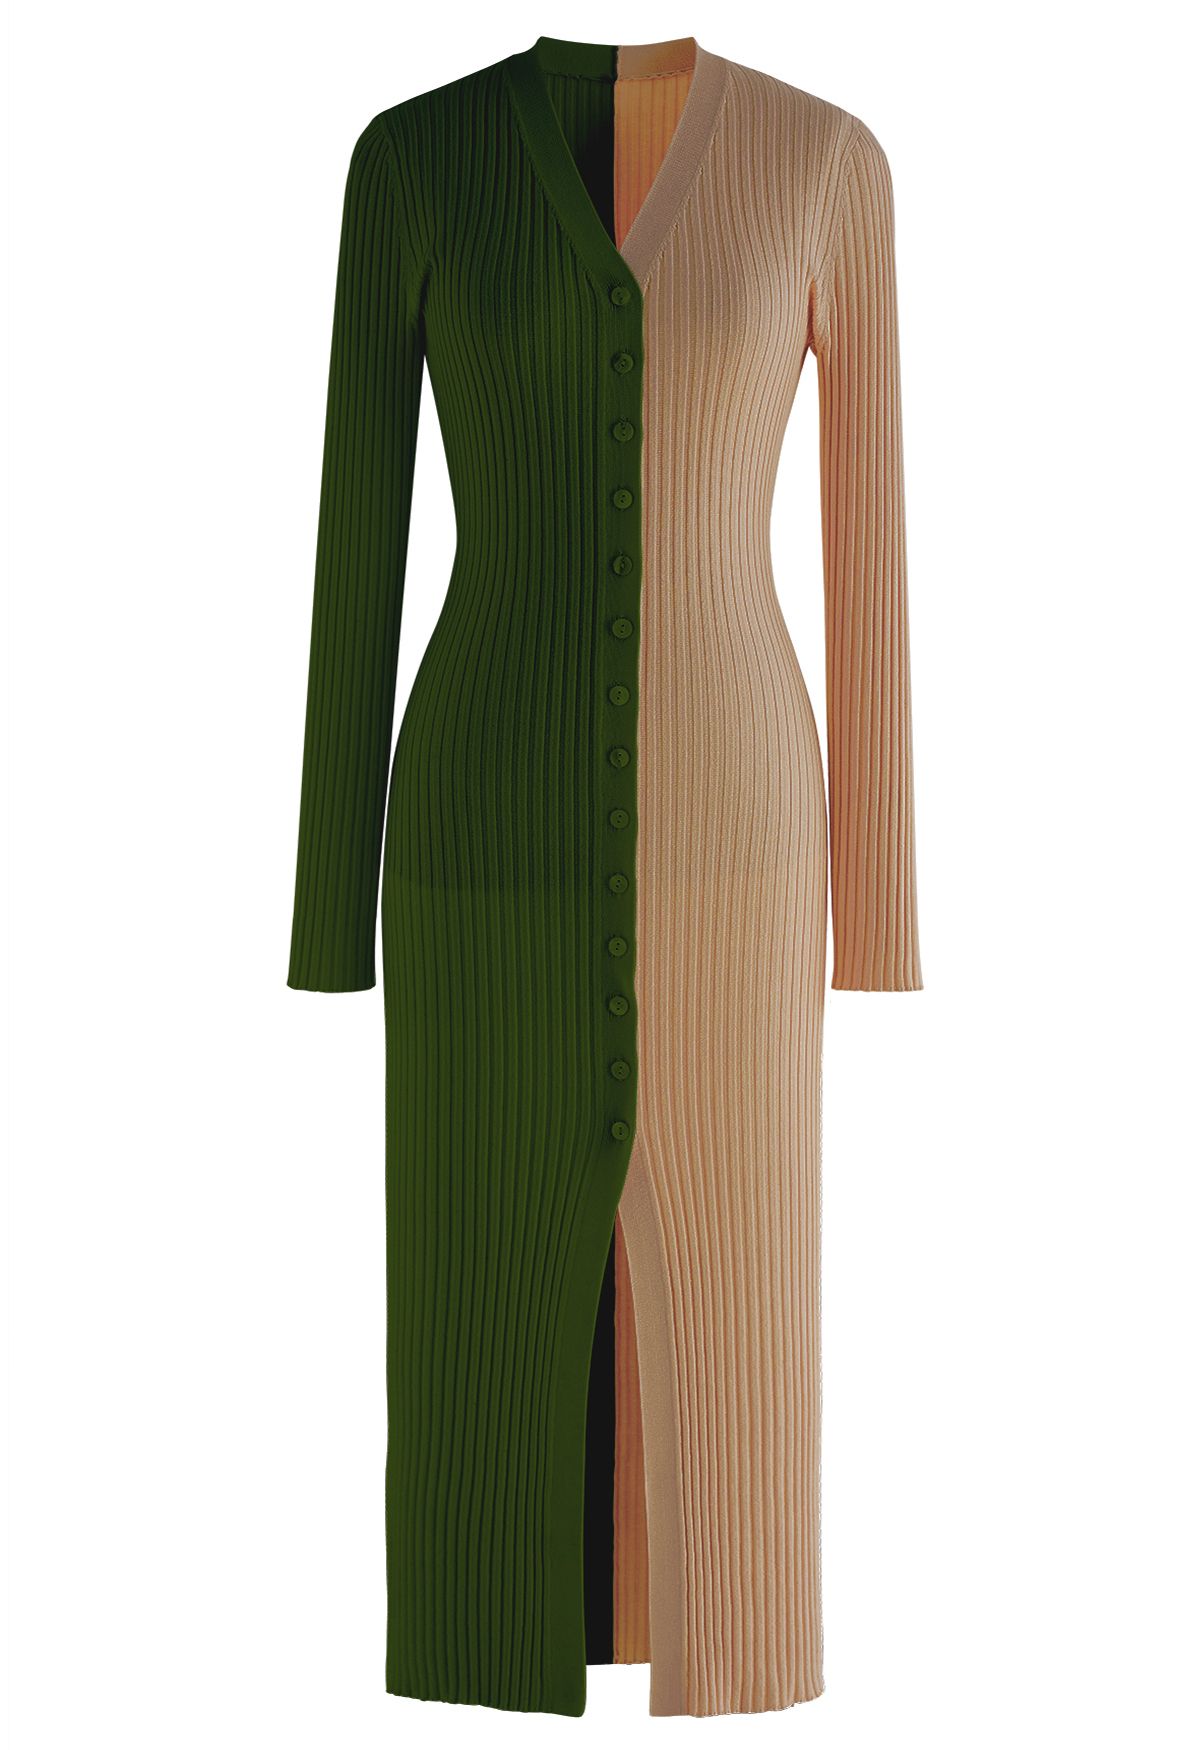 Button Down Two-Tone Spliced Bodycon Knit Dress in Tan